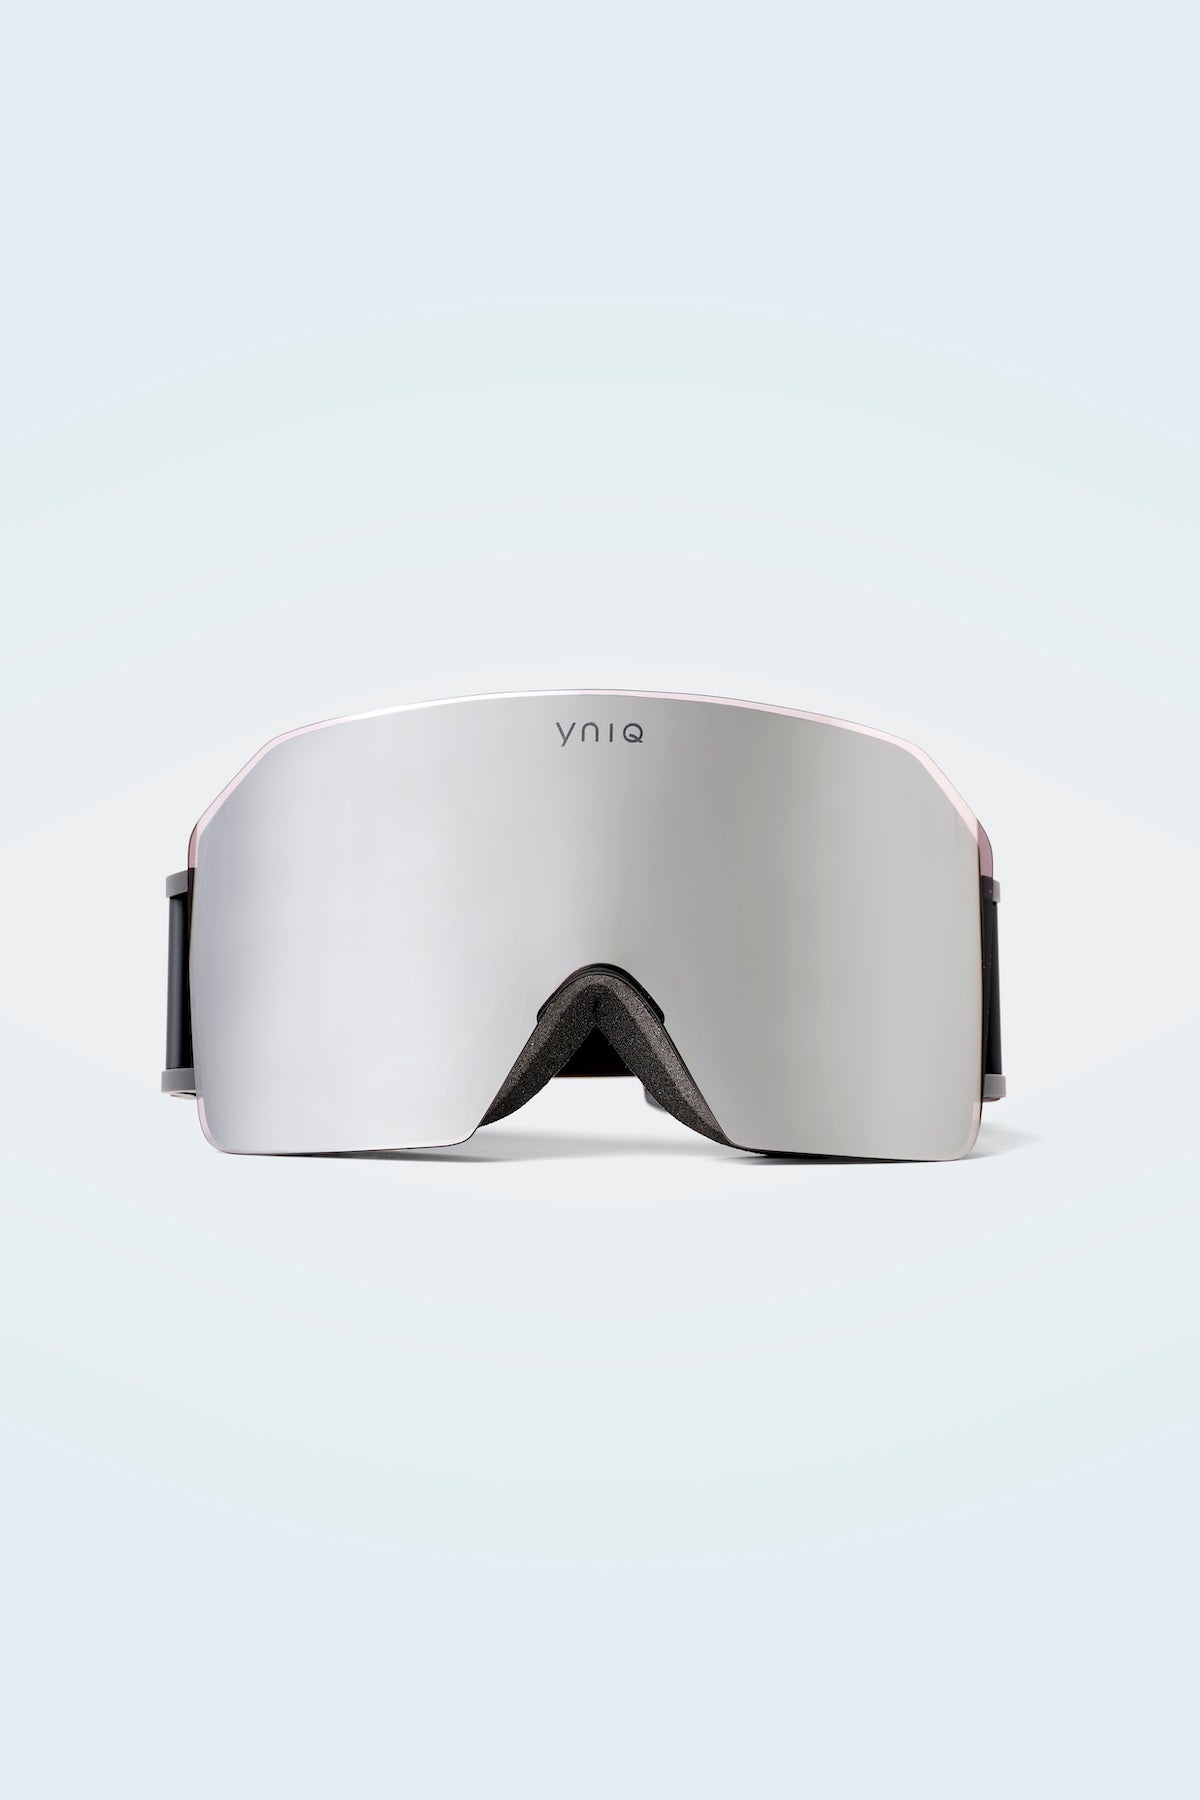 MYLAN Frameless YNIQ Collaboration Ski Goggles - 1